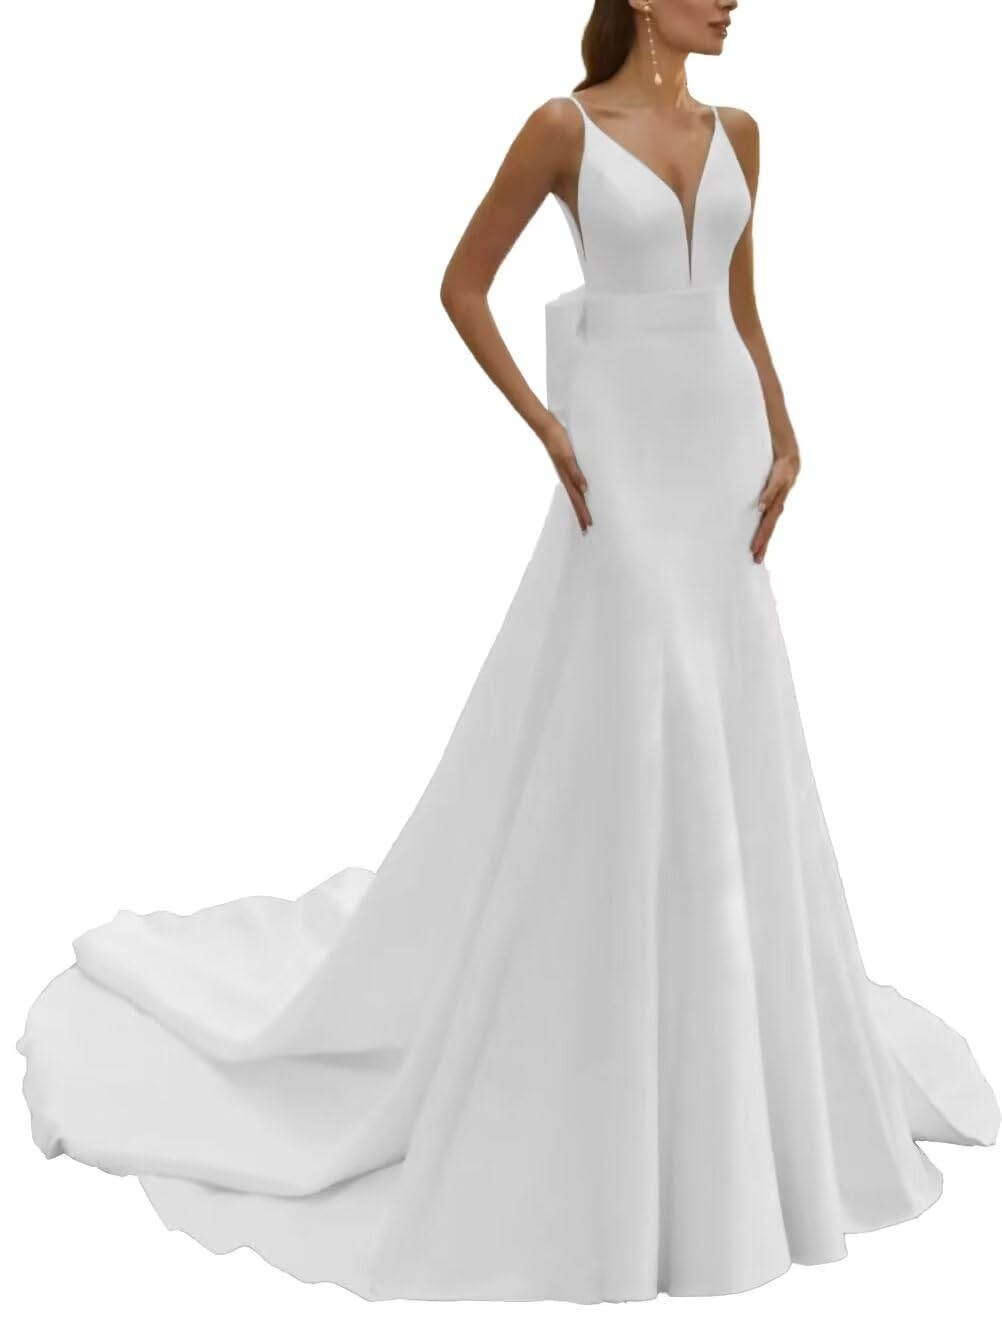 DNEKSEIK Elegant Mermaid Satin Wedding Dresses for Bride Spaghetti Strap Bridal Gown Open Back with Bow for Women